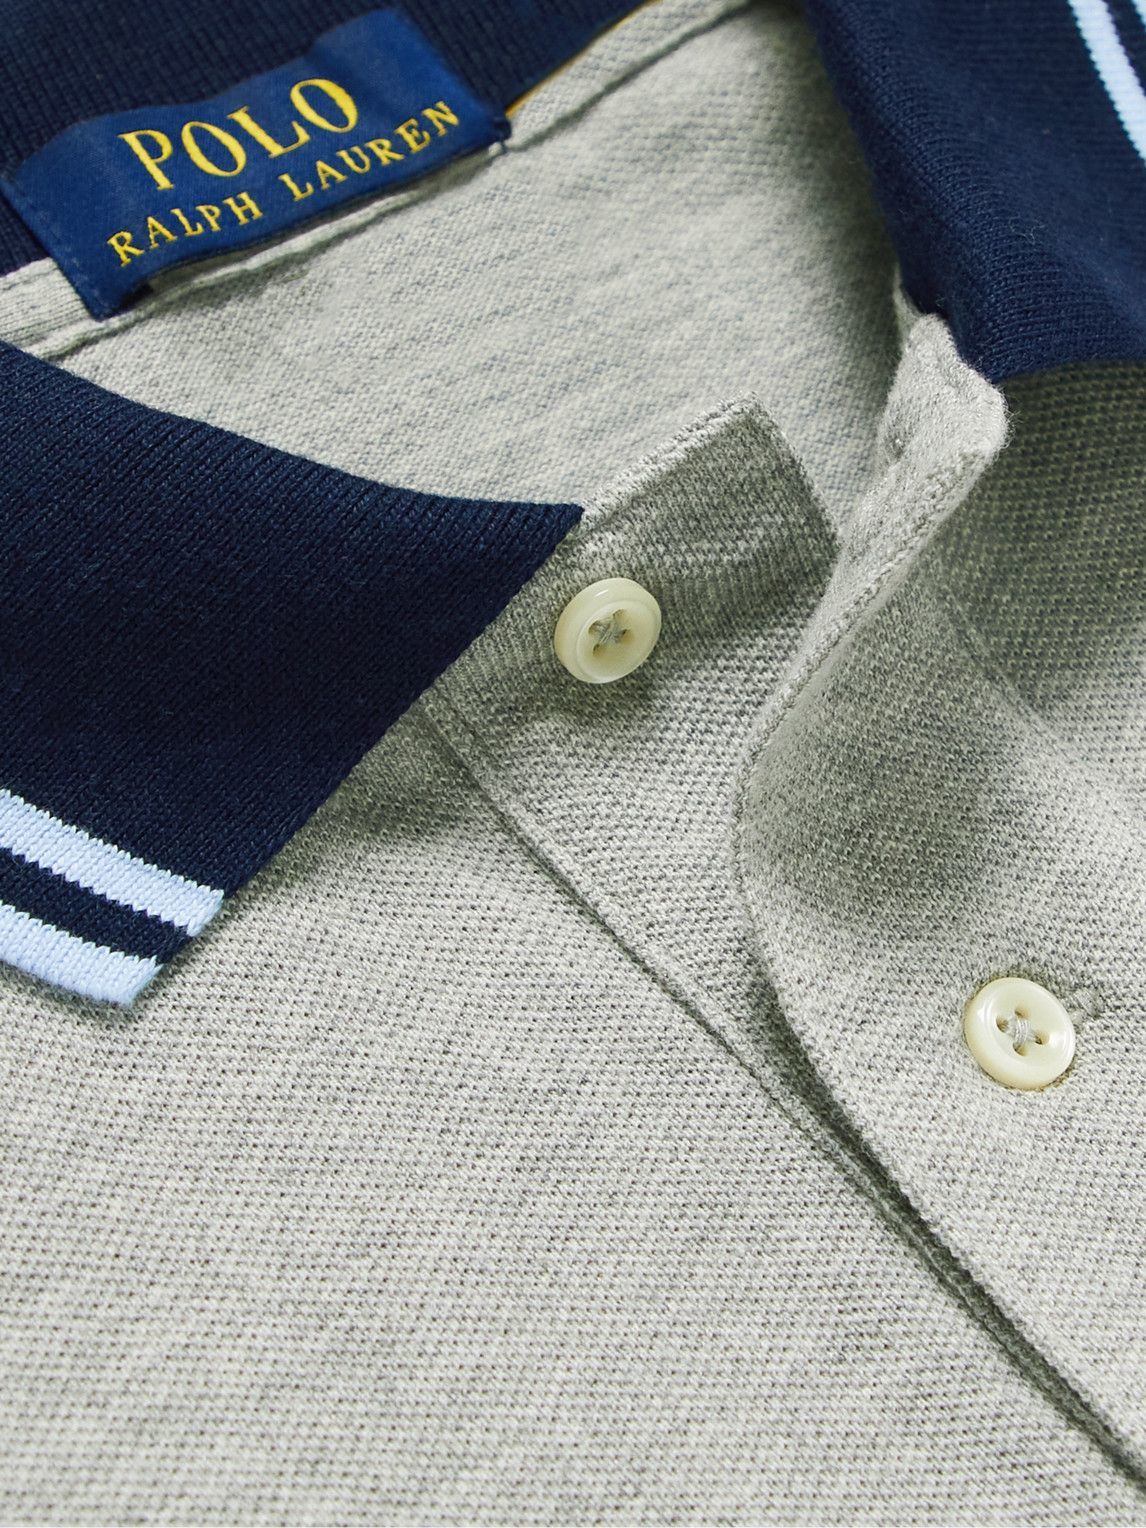 Polo Ralph Lauren - Slim-Fit Logo-Embroidered Cotton-Piqué Polo Shirt - Gray